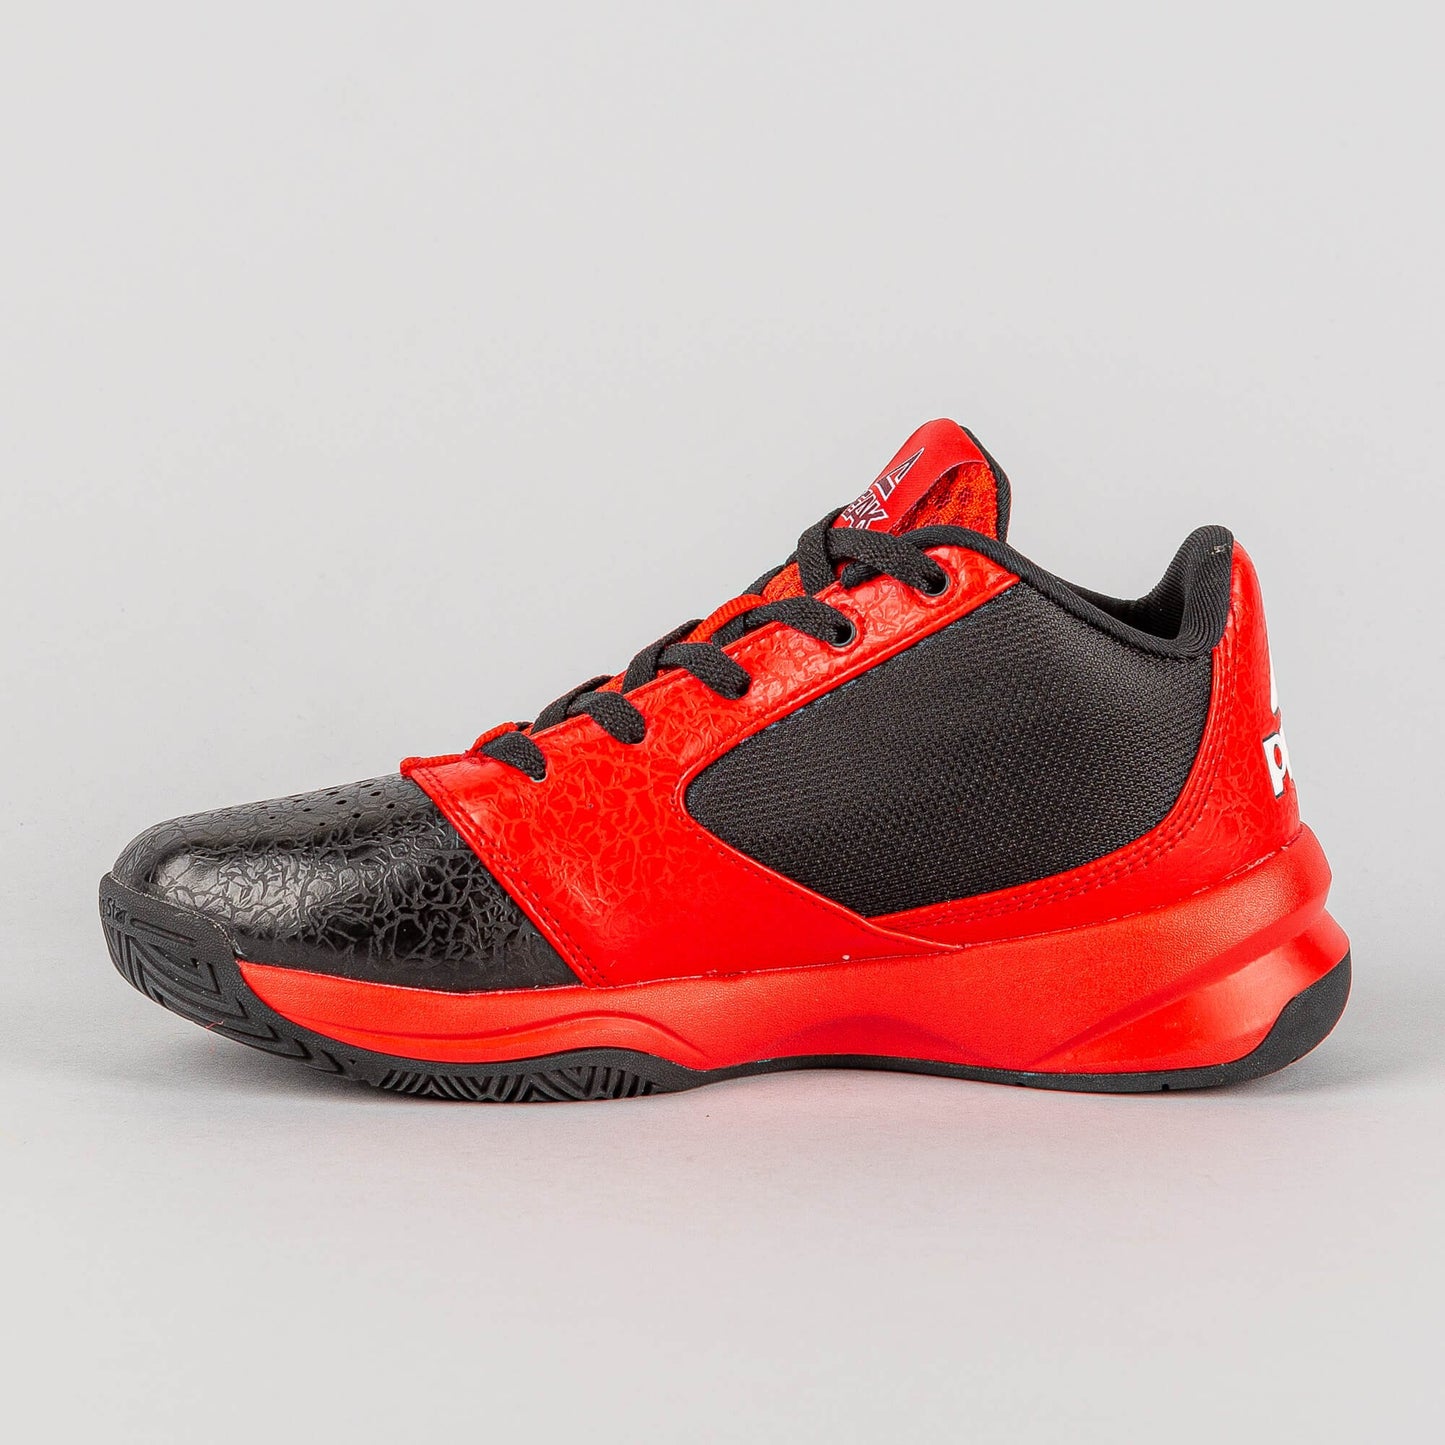 PEAK Basketball Shoes Nova Black/Red